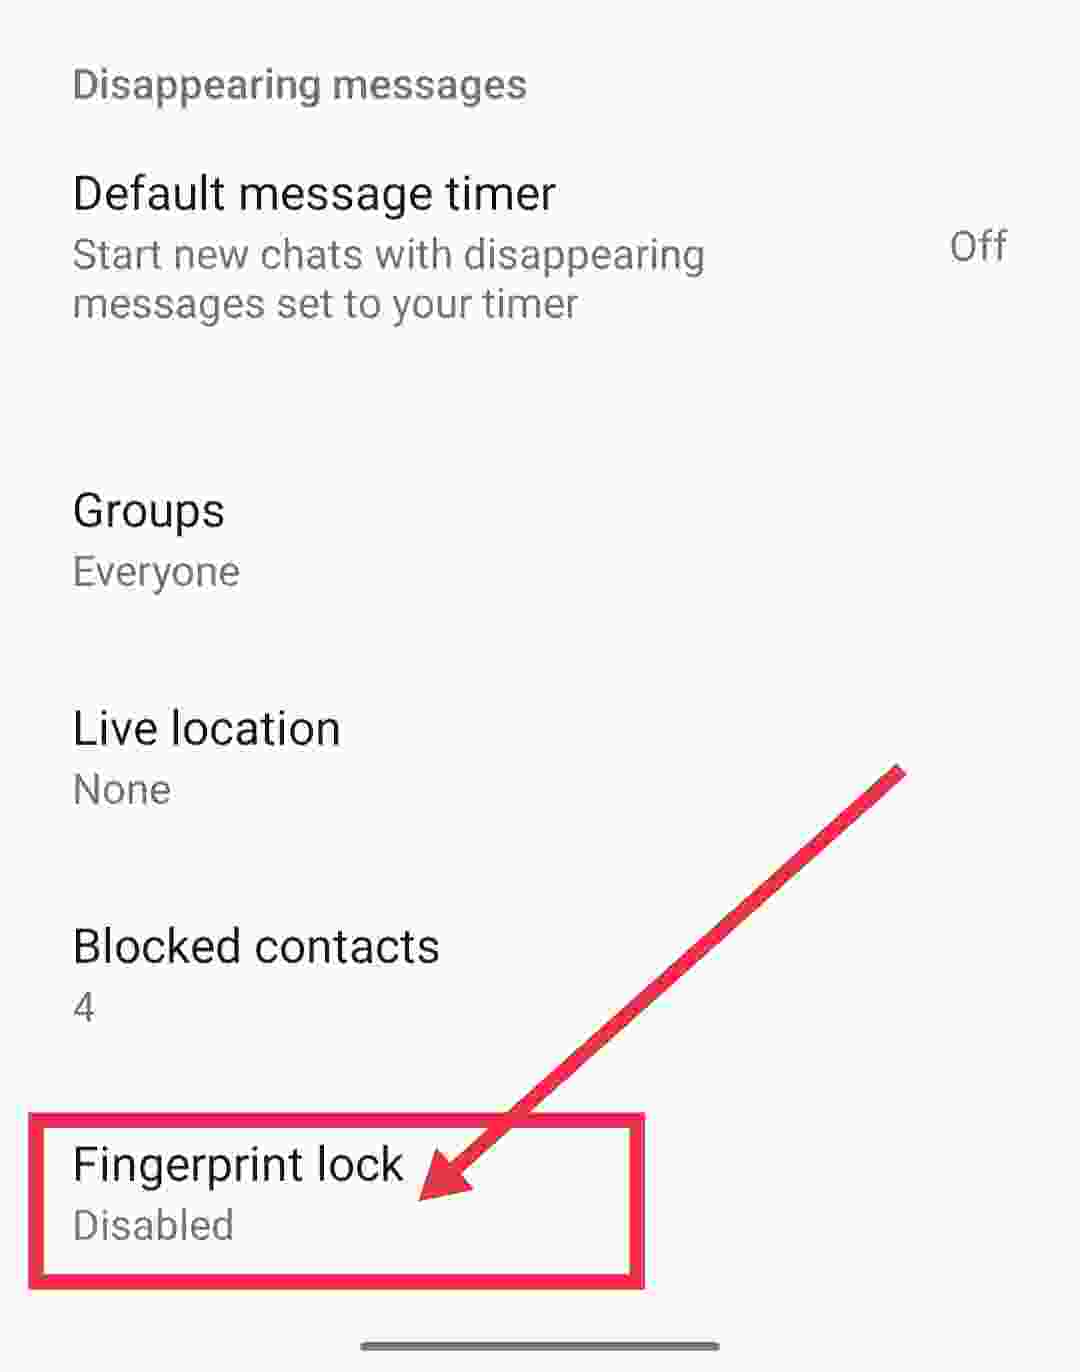 Add-Fingerprint-Lock